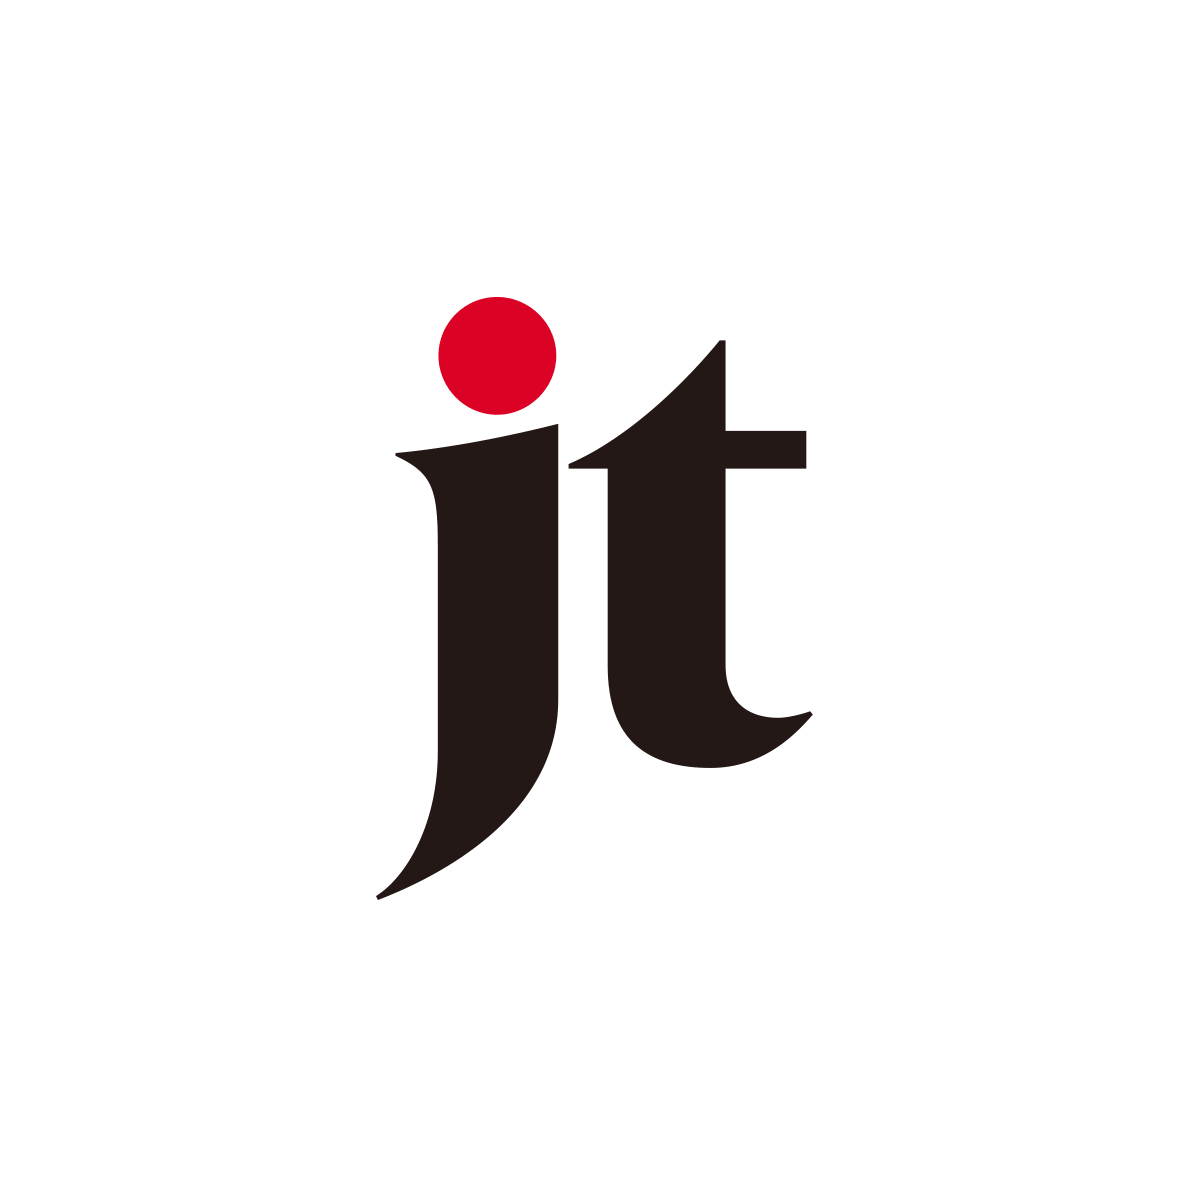 Japanese Information Technology Company Logo - The Japan Times - News on Japan, Business News, Opinion, Sports ...